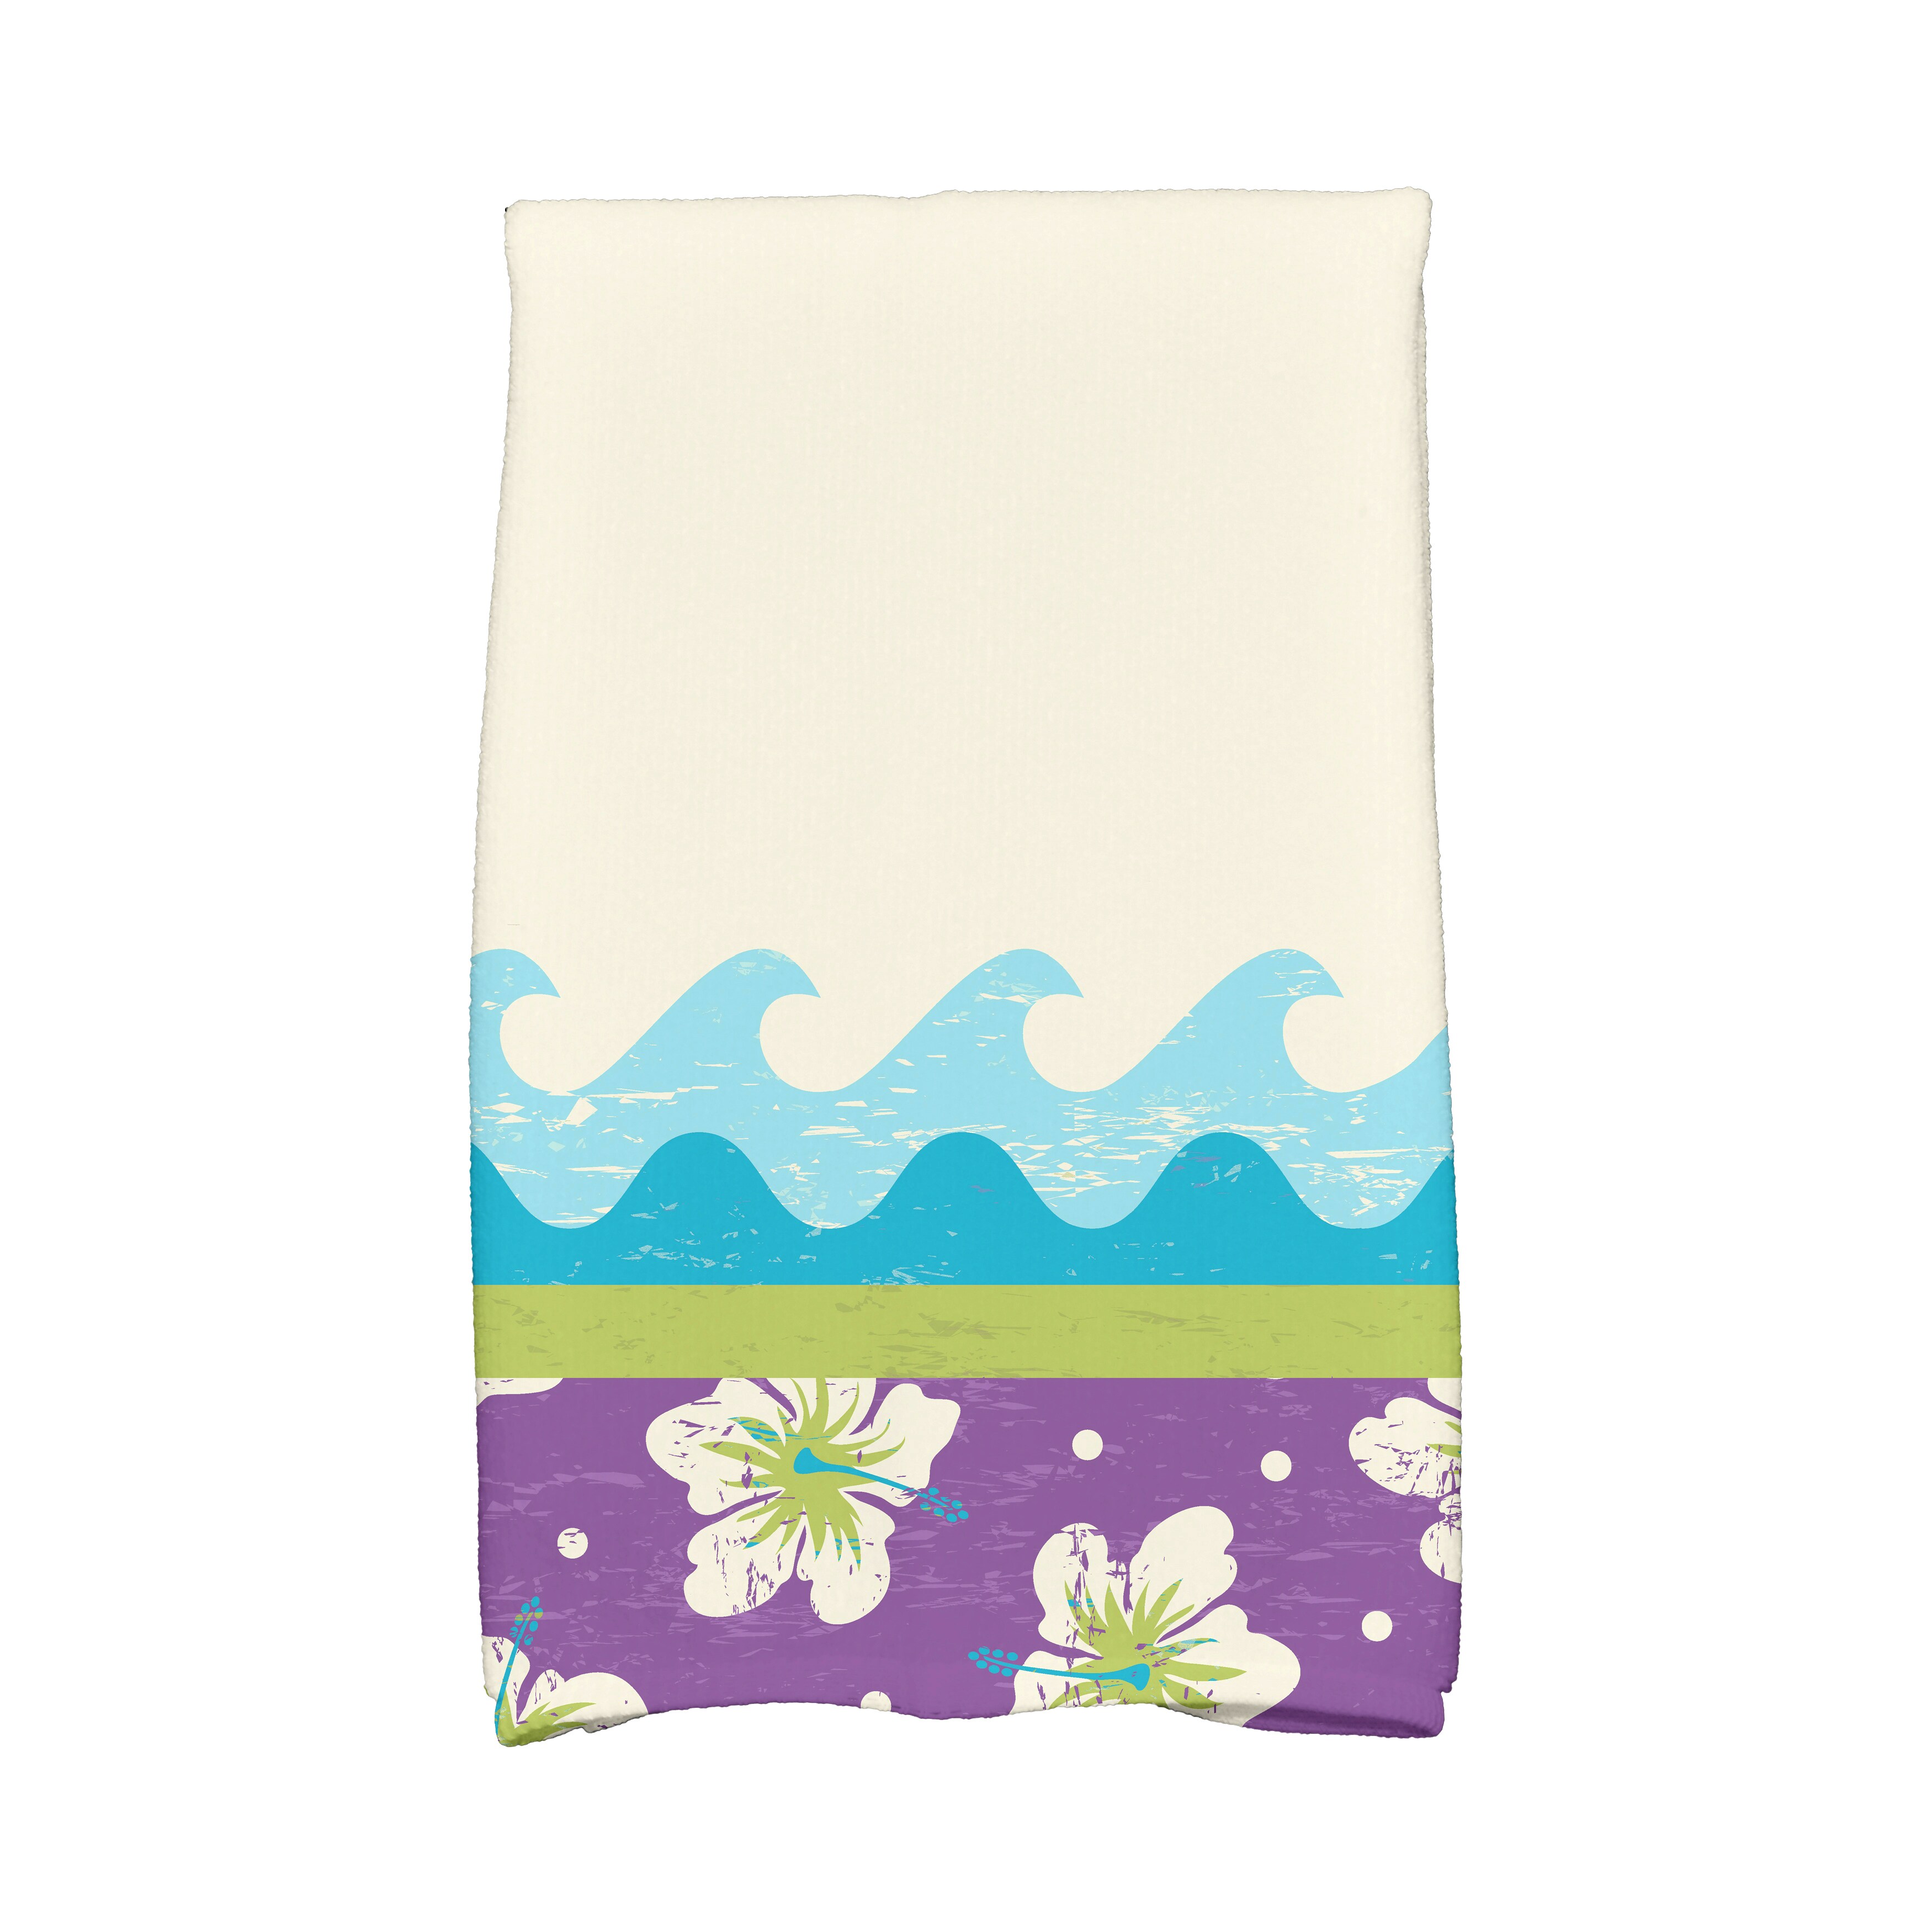 https://ak1.ostkcdn.com/images/products/12305201/16-x-25-inch-Surf-Sand-Sea-Floral-Print-Kitchen-Towel-252456cd-9941-4e65-9b34-db3a9624c211.jpg